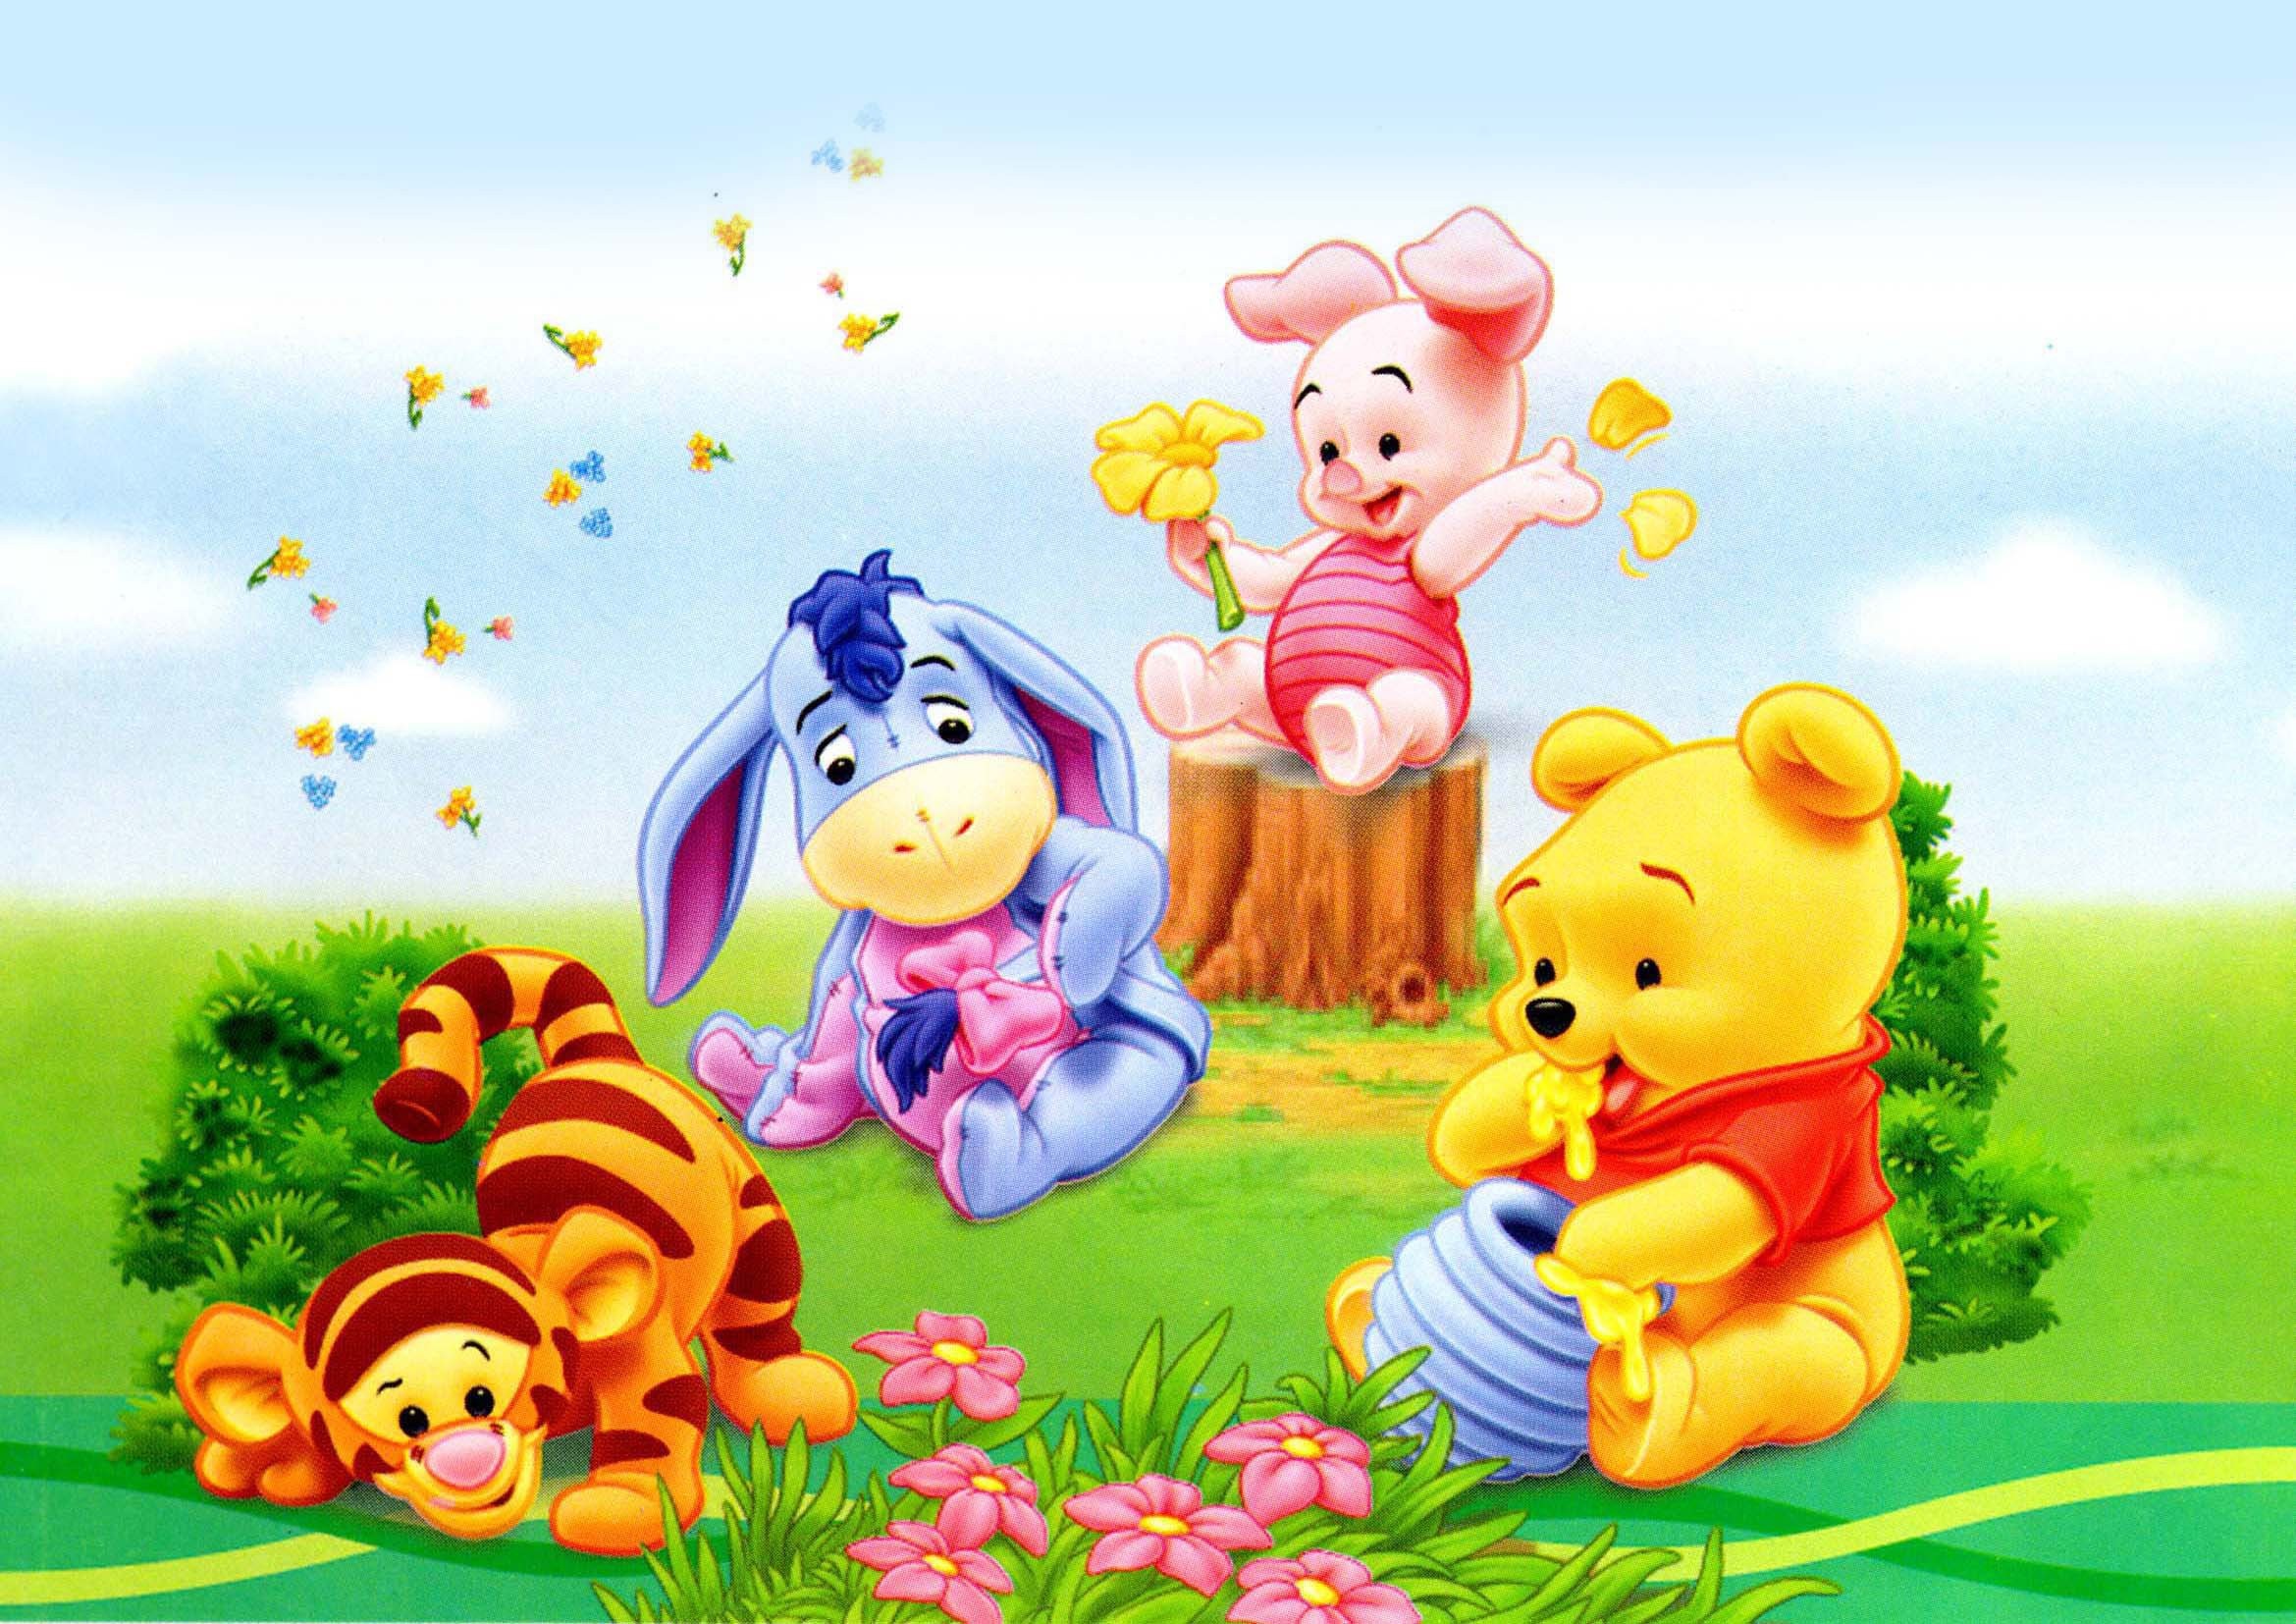 Winnie the pooh disney lock screen wallpaper  Winnie the pooh drawing  Cute cartoon wallpapers Whinnie the pooh drawings